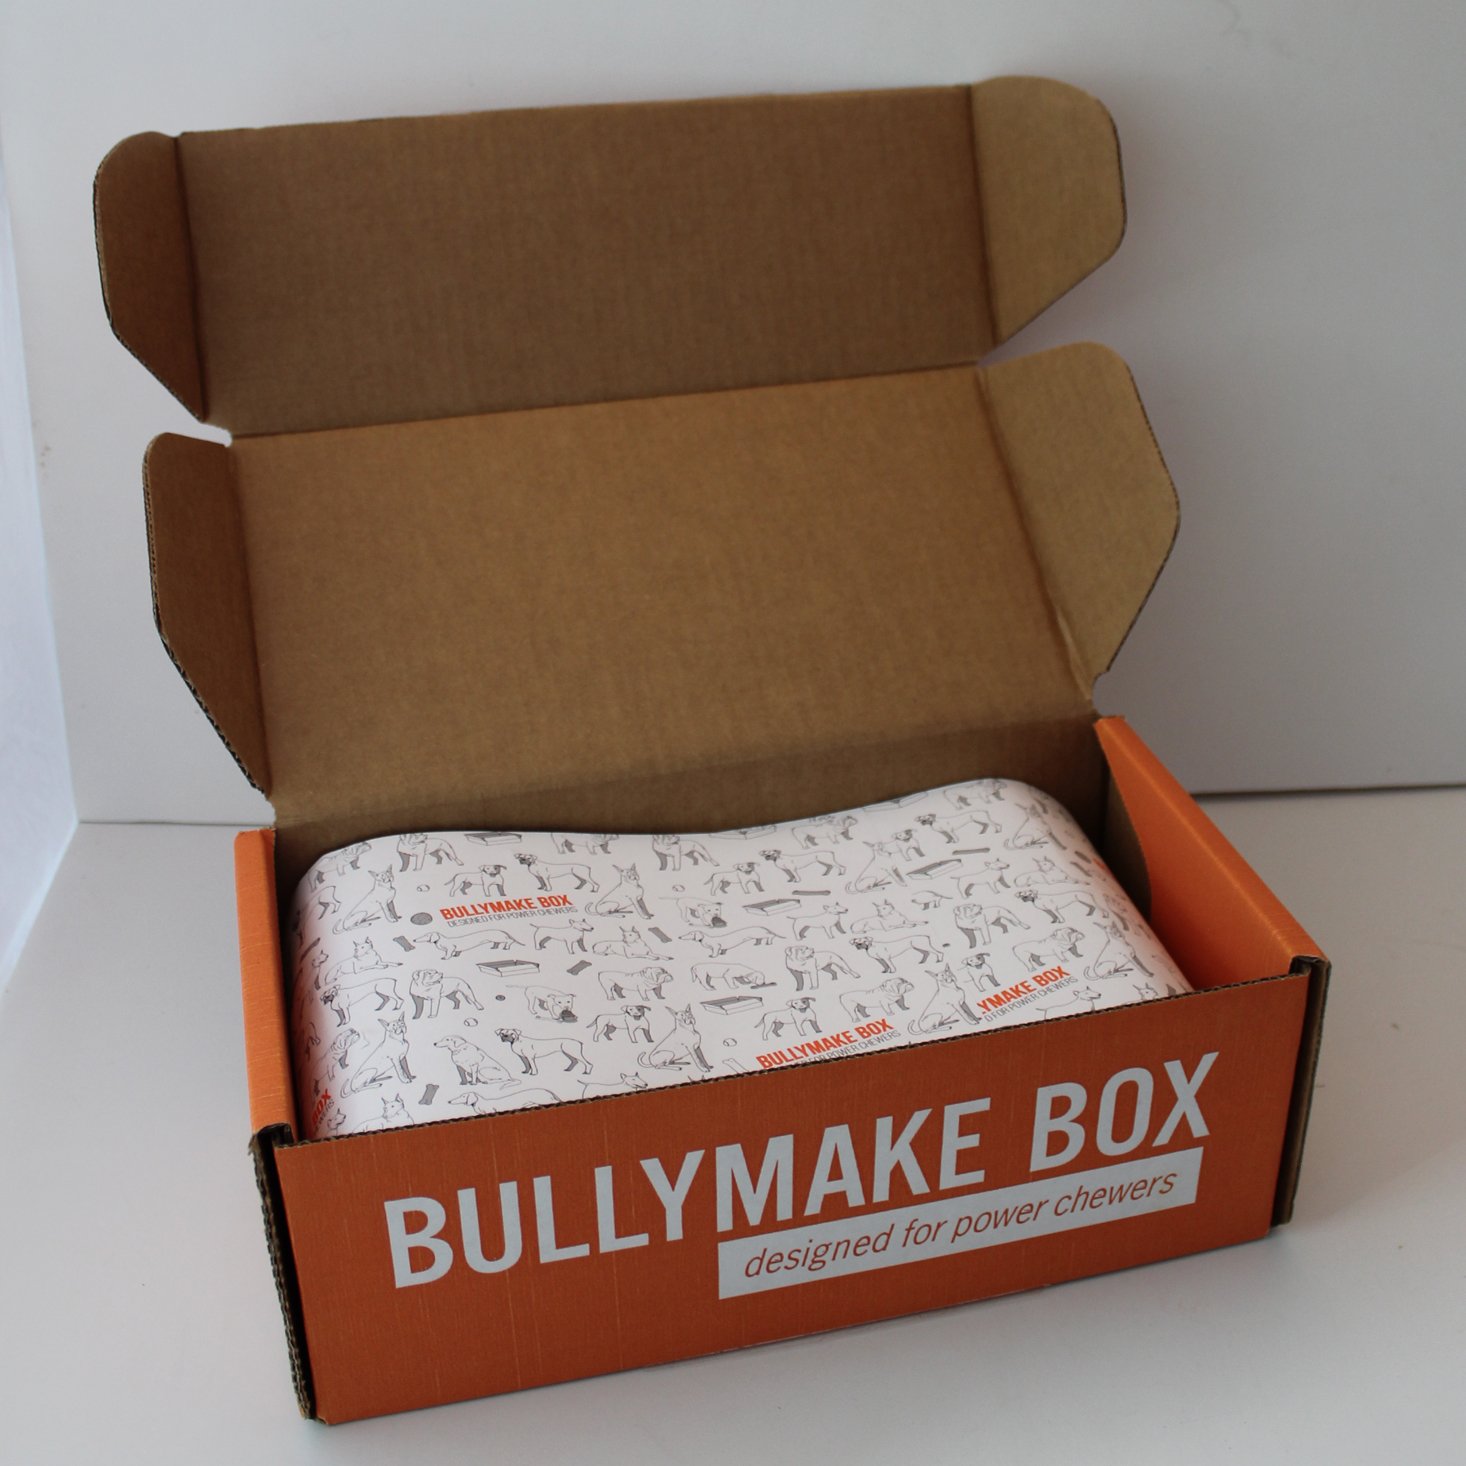 Bullymake Box November 2019 Inside